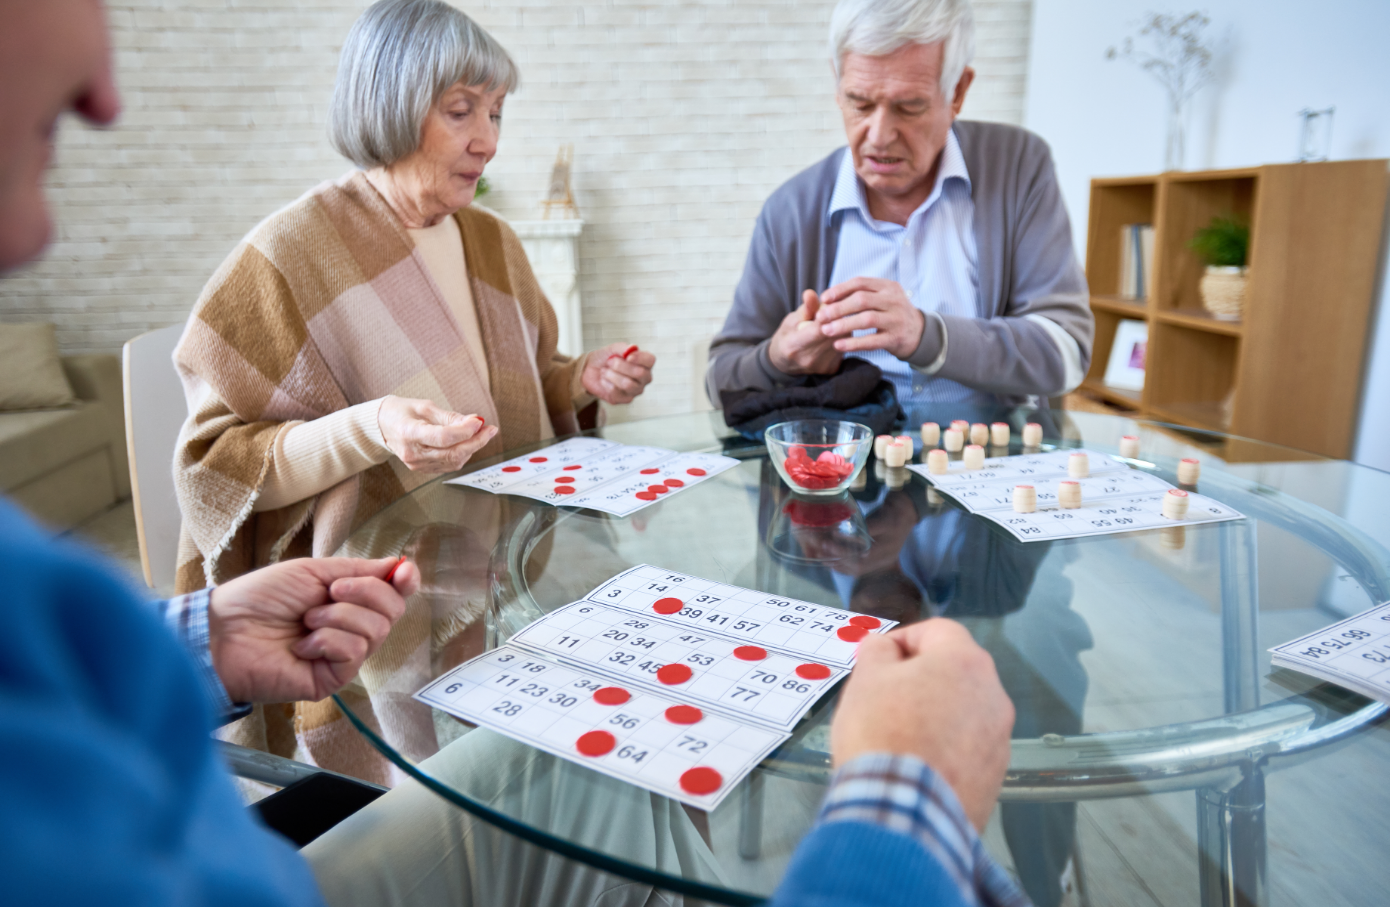 19 Fun & Engaging Indoor Activities for Seniors - The Estates at